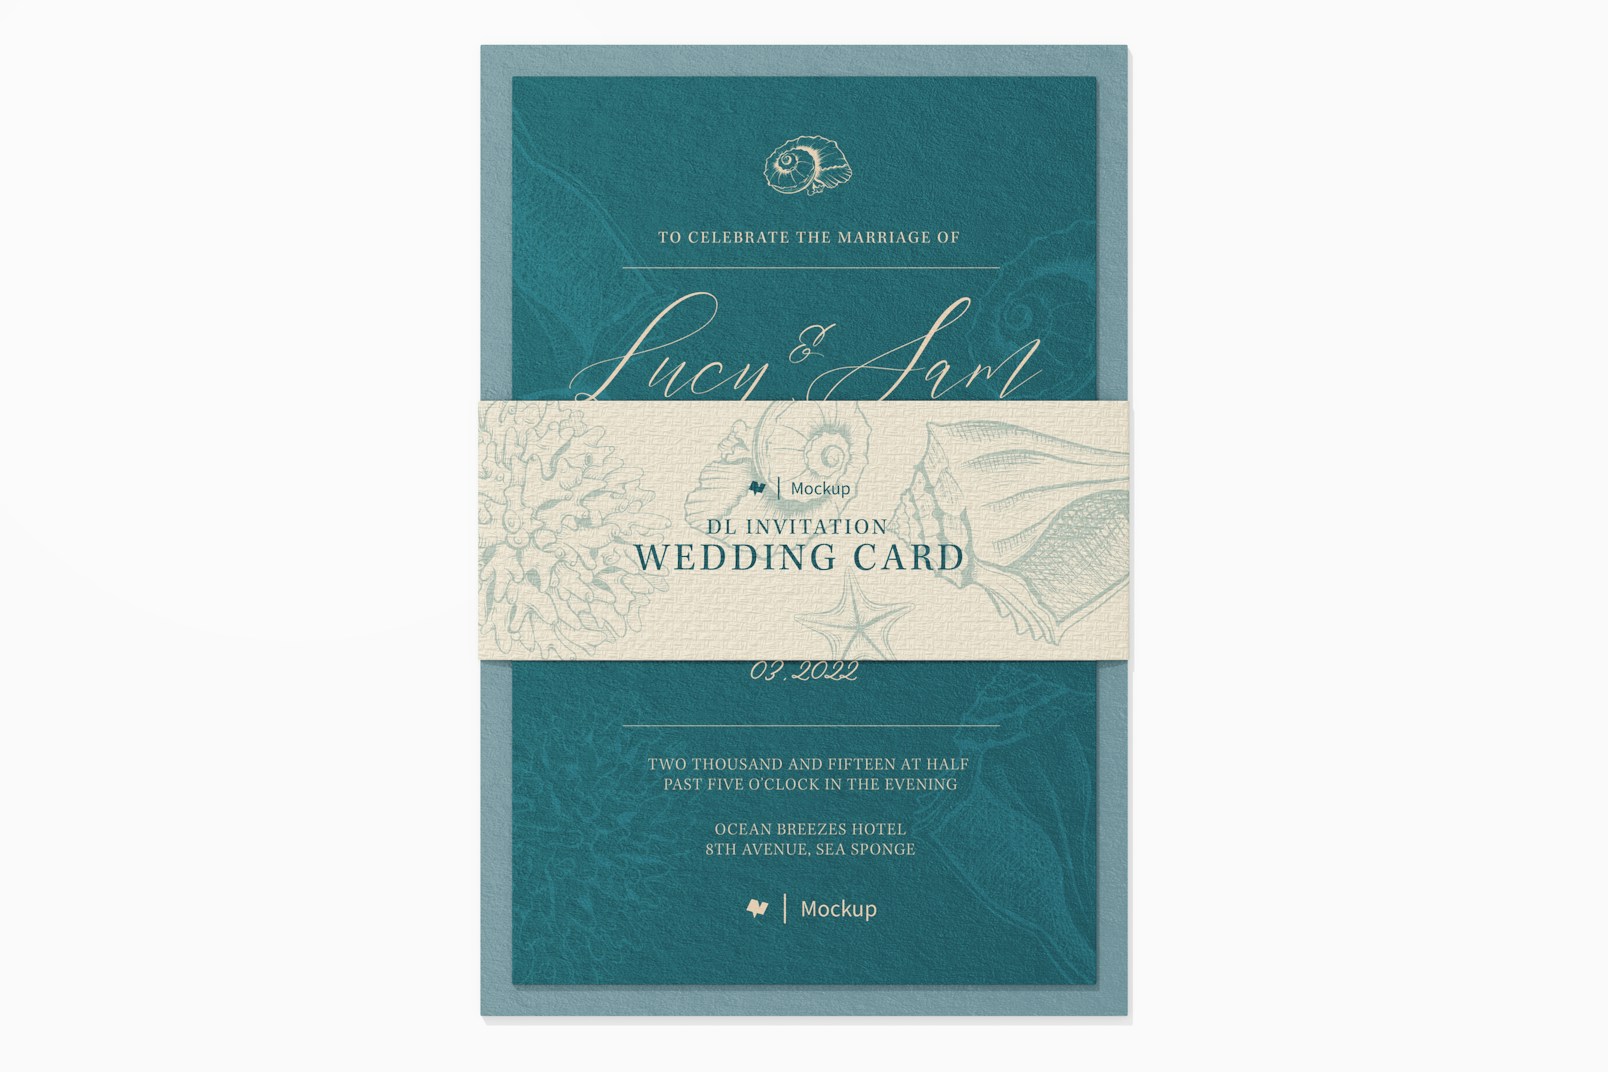 DL Invitation Wedding Card Mockup, Top View